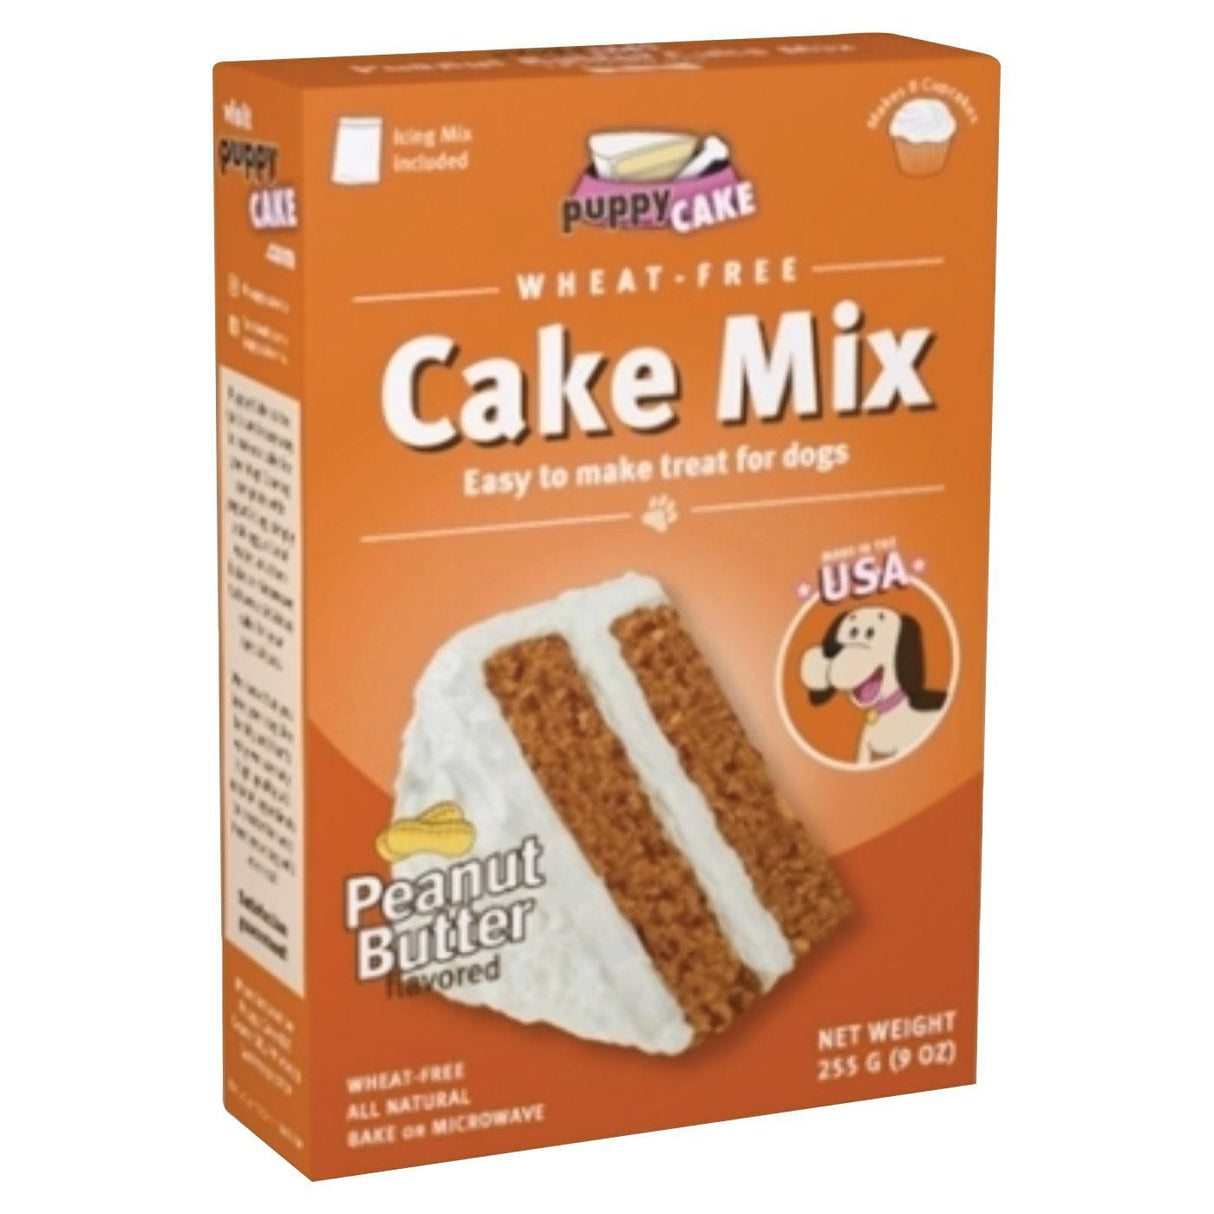 Puppy Cake Wheat Free Peanut Butter Cake Mix 9 oz.